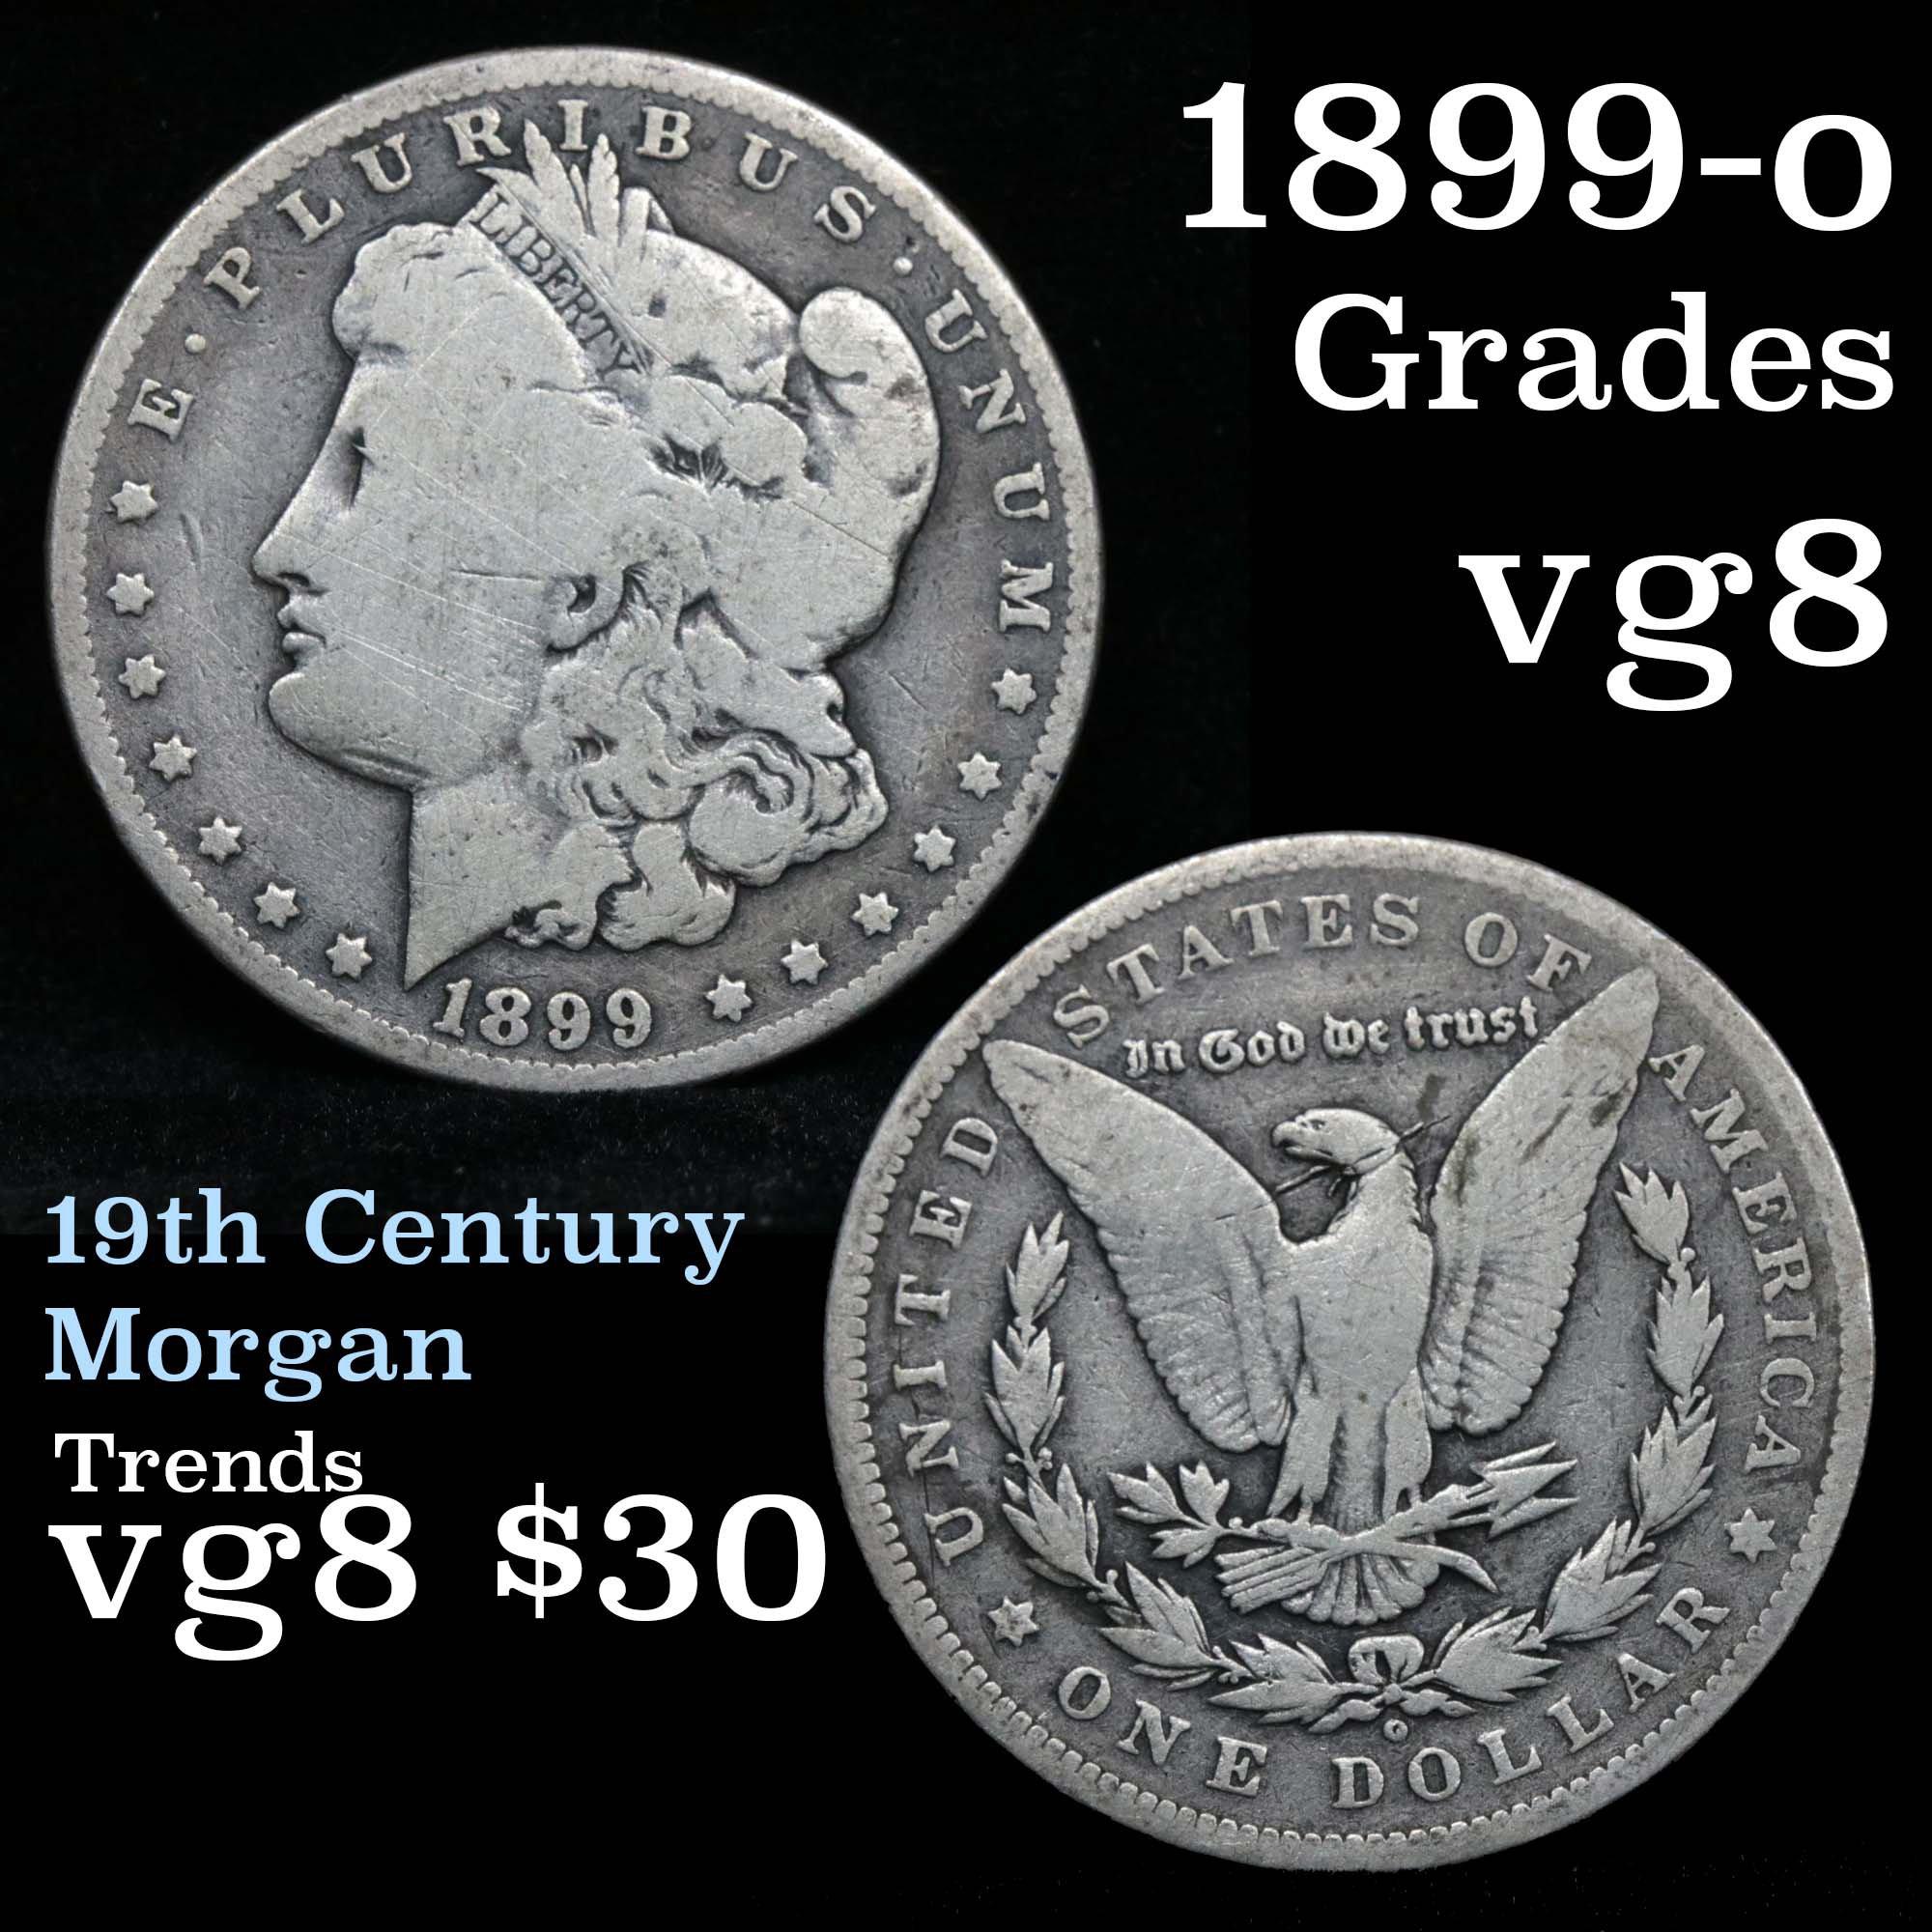 1899-o Morgan Dollar $1 Grades vg, very good